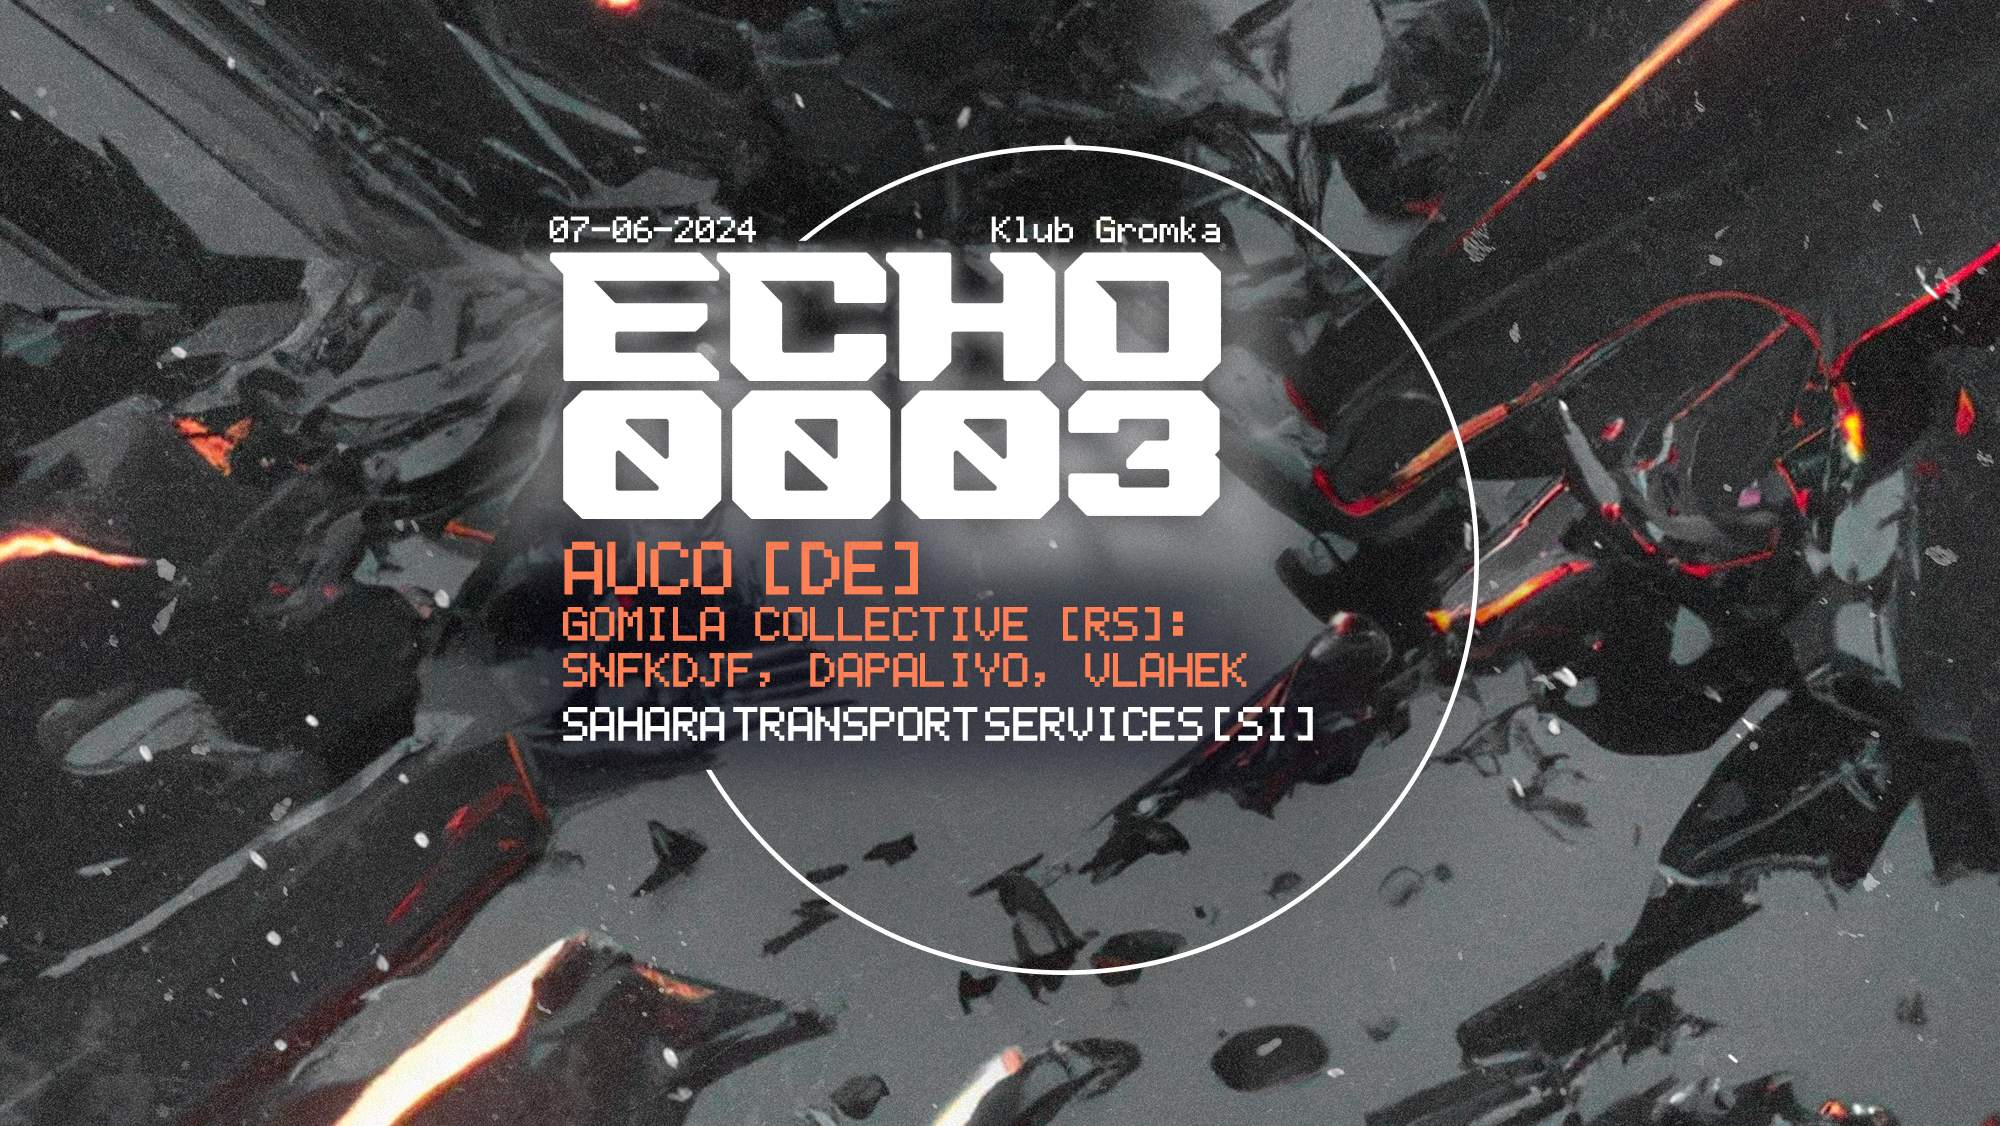 Echo0003 with AUCO [DE] & Gomila [RS] - フライヤー裏